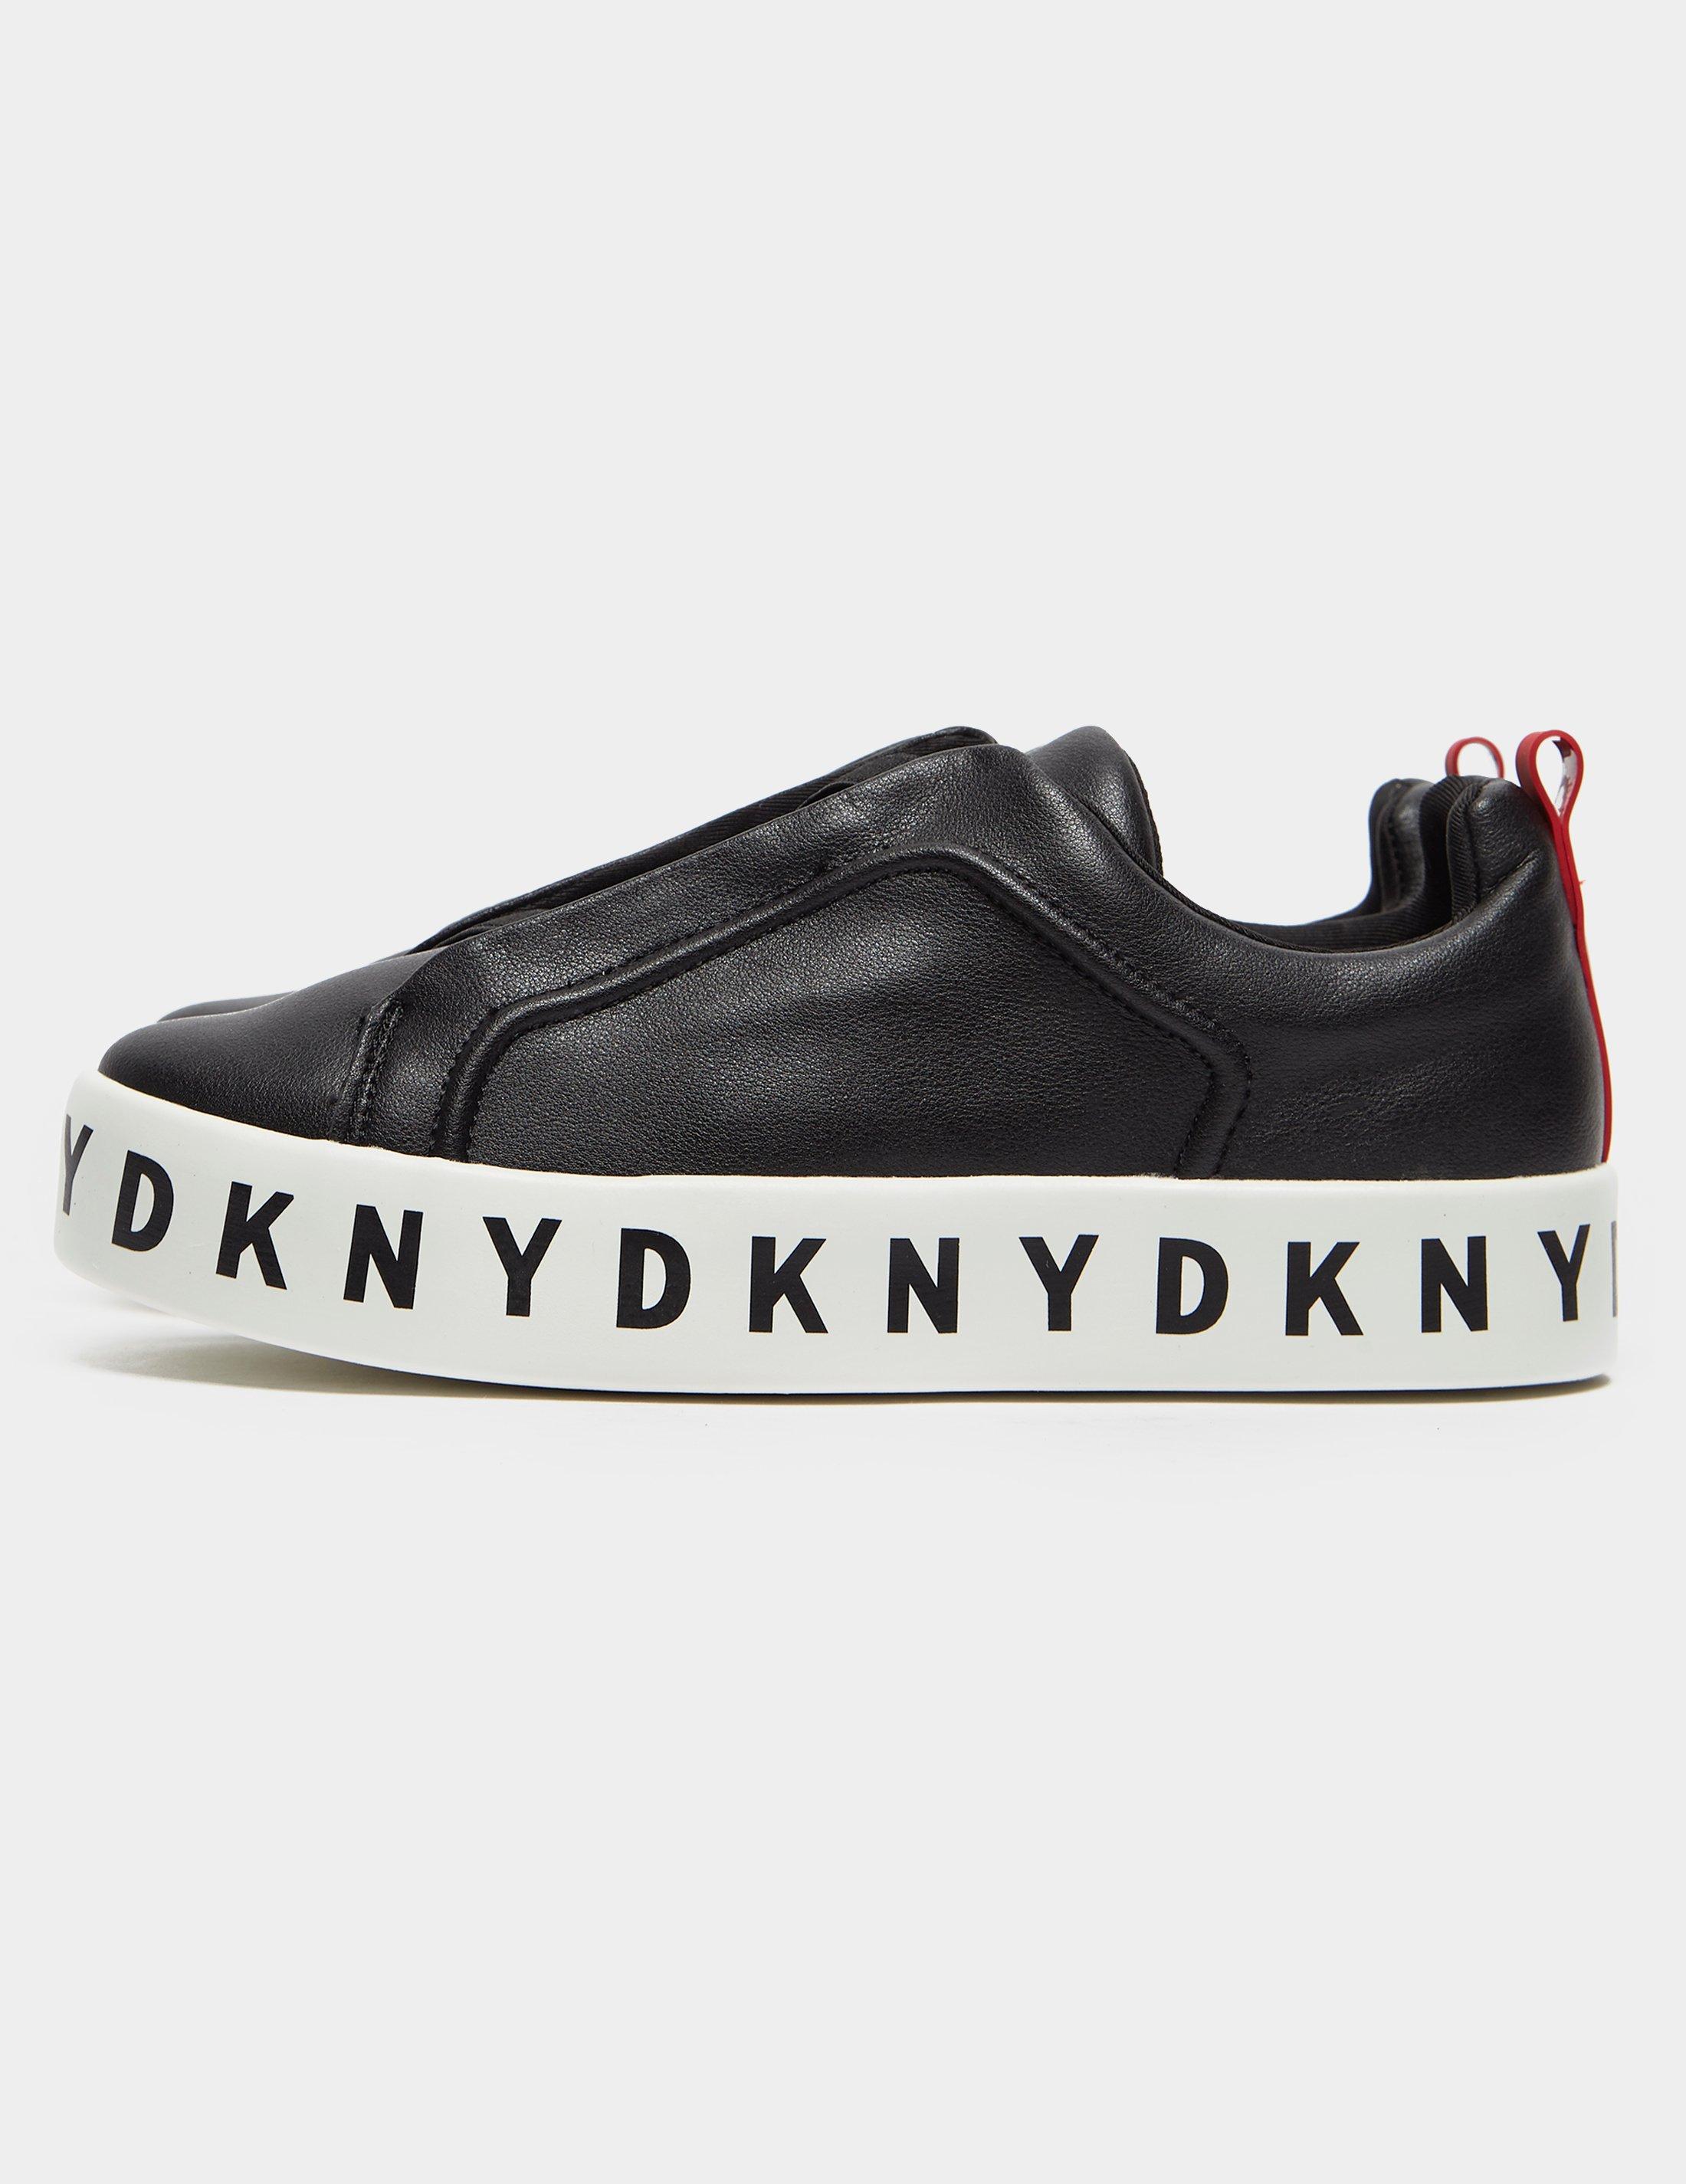 dkny black trainers